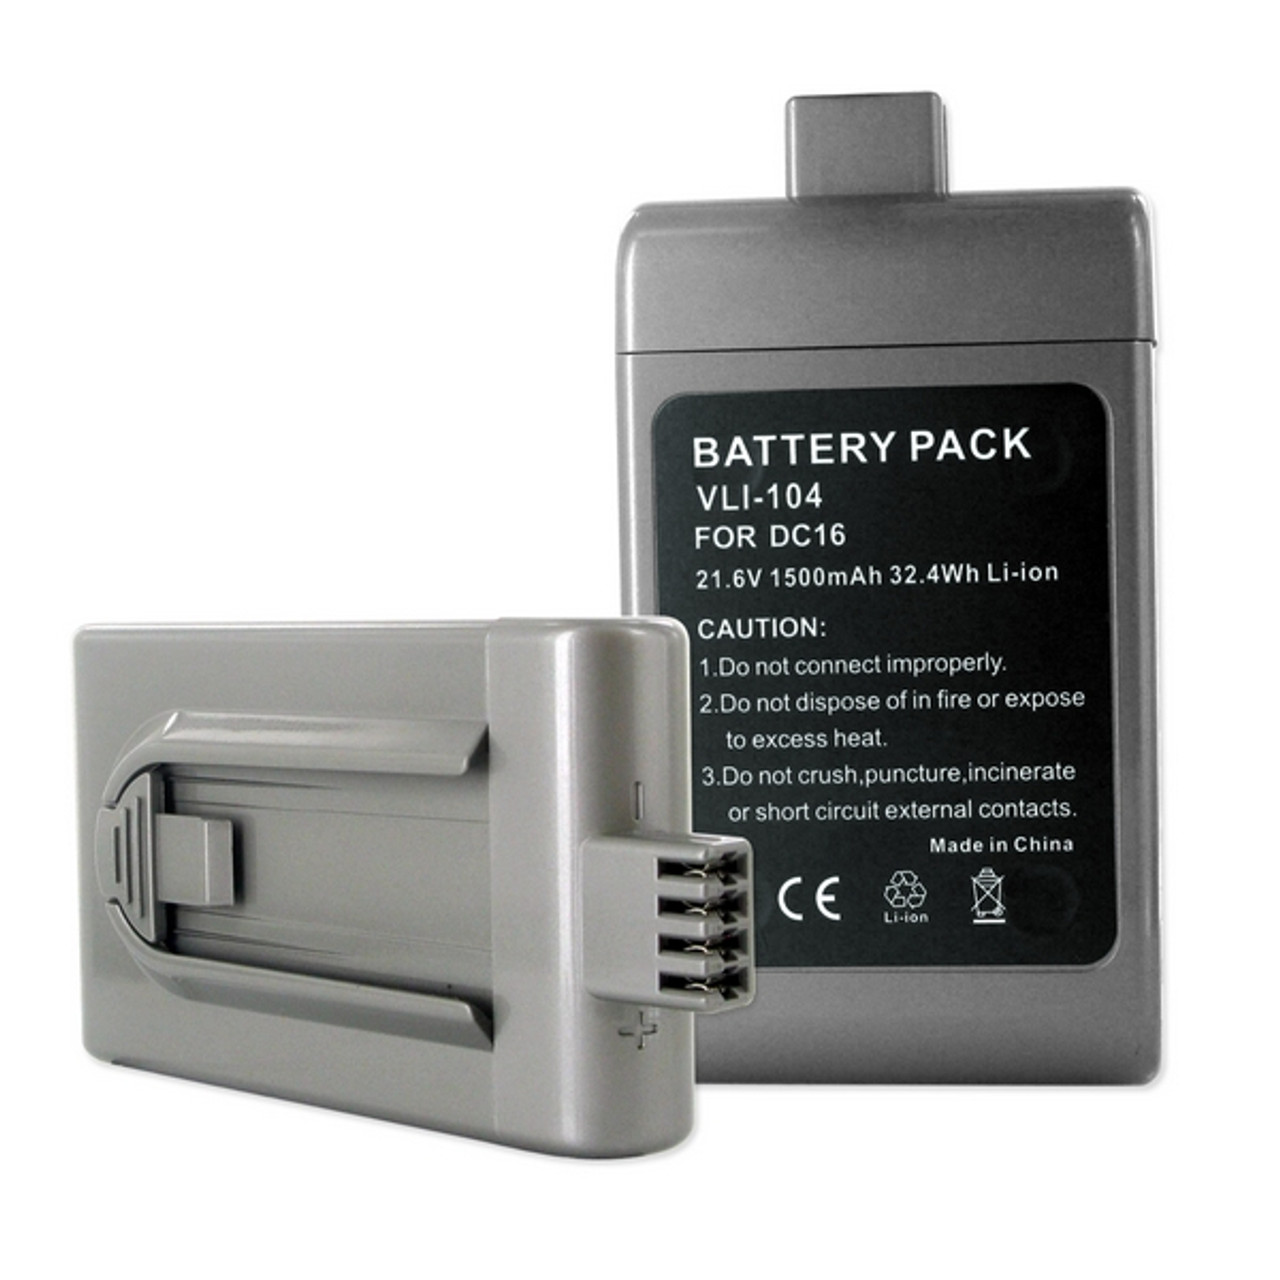 Dyson BP-01 Battery